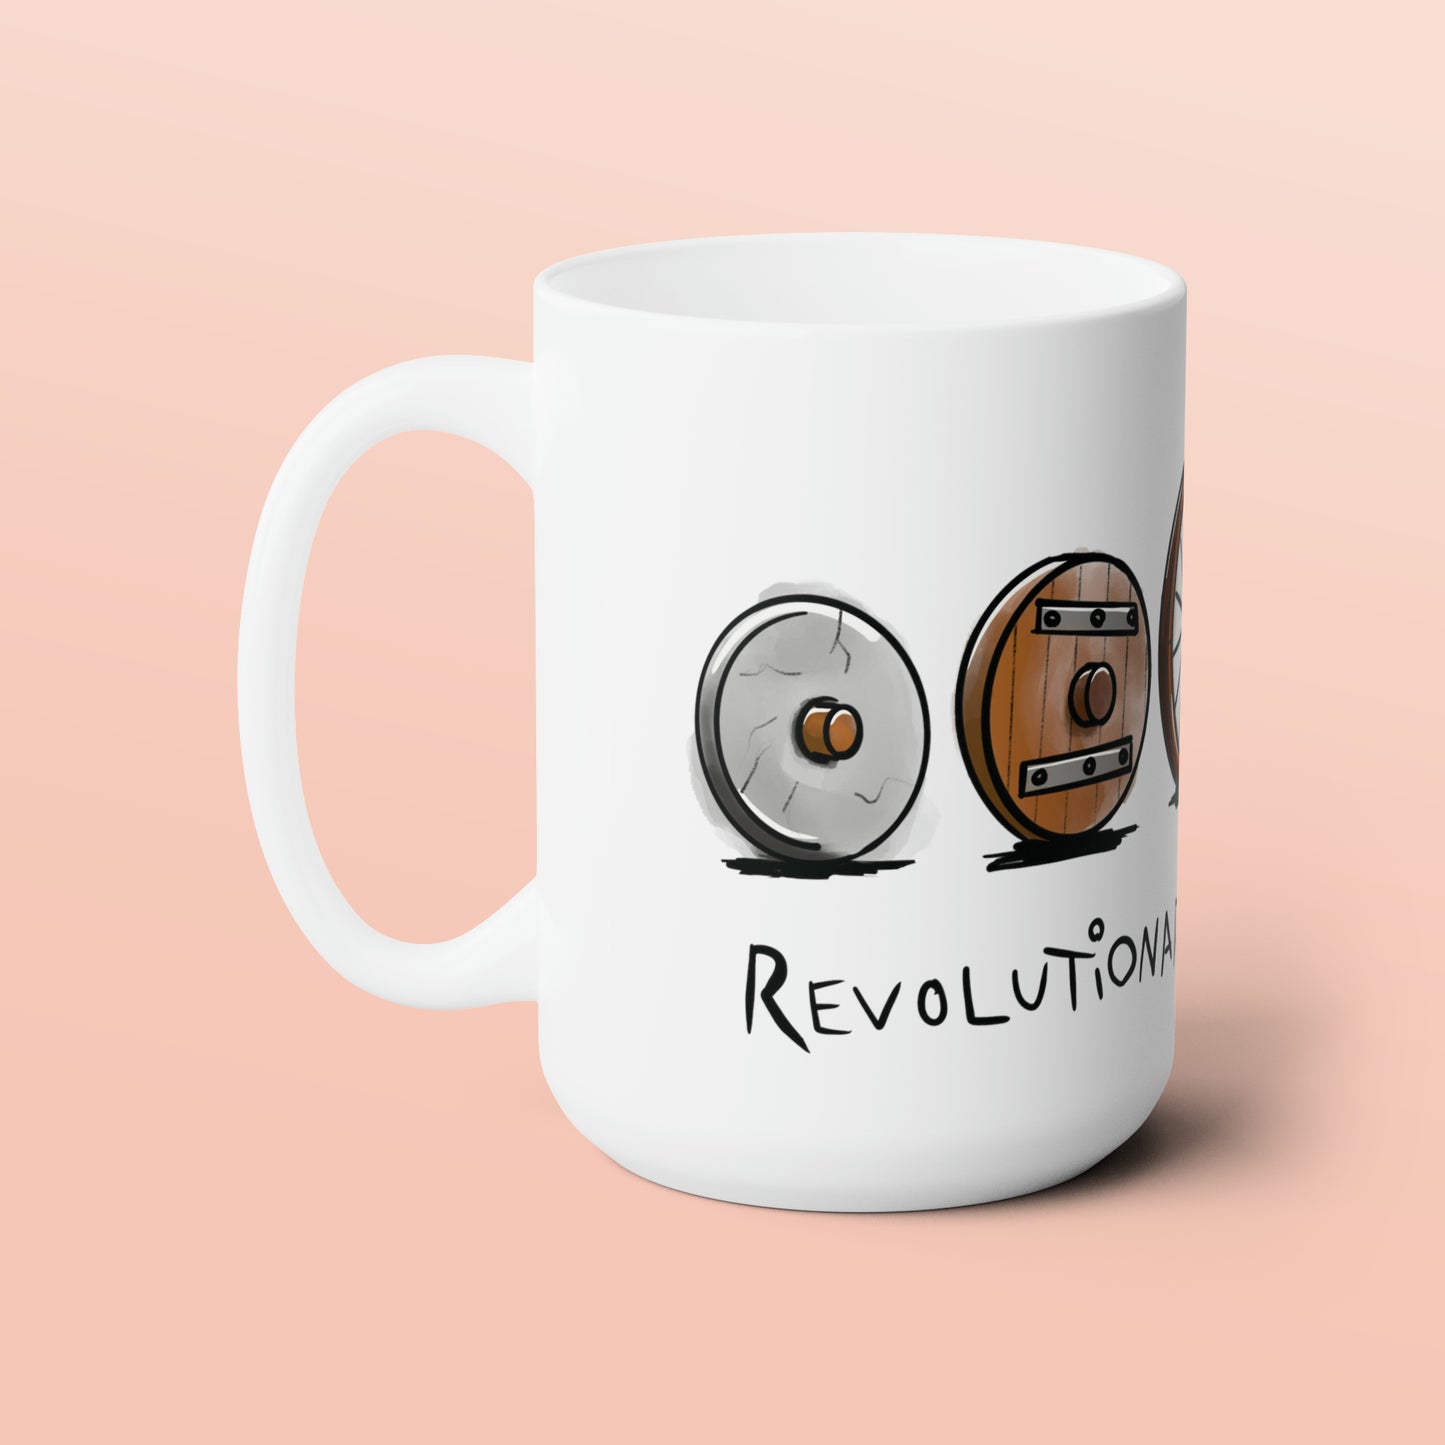 Revolutionary Technology Mug